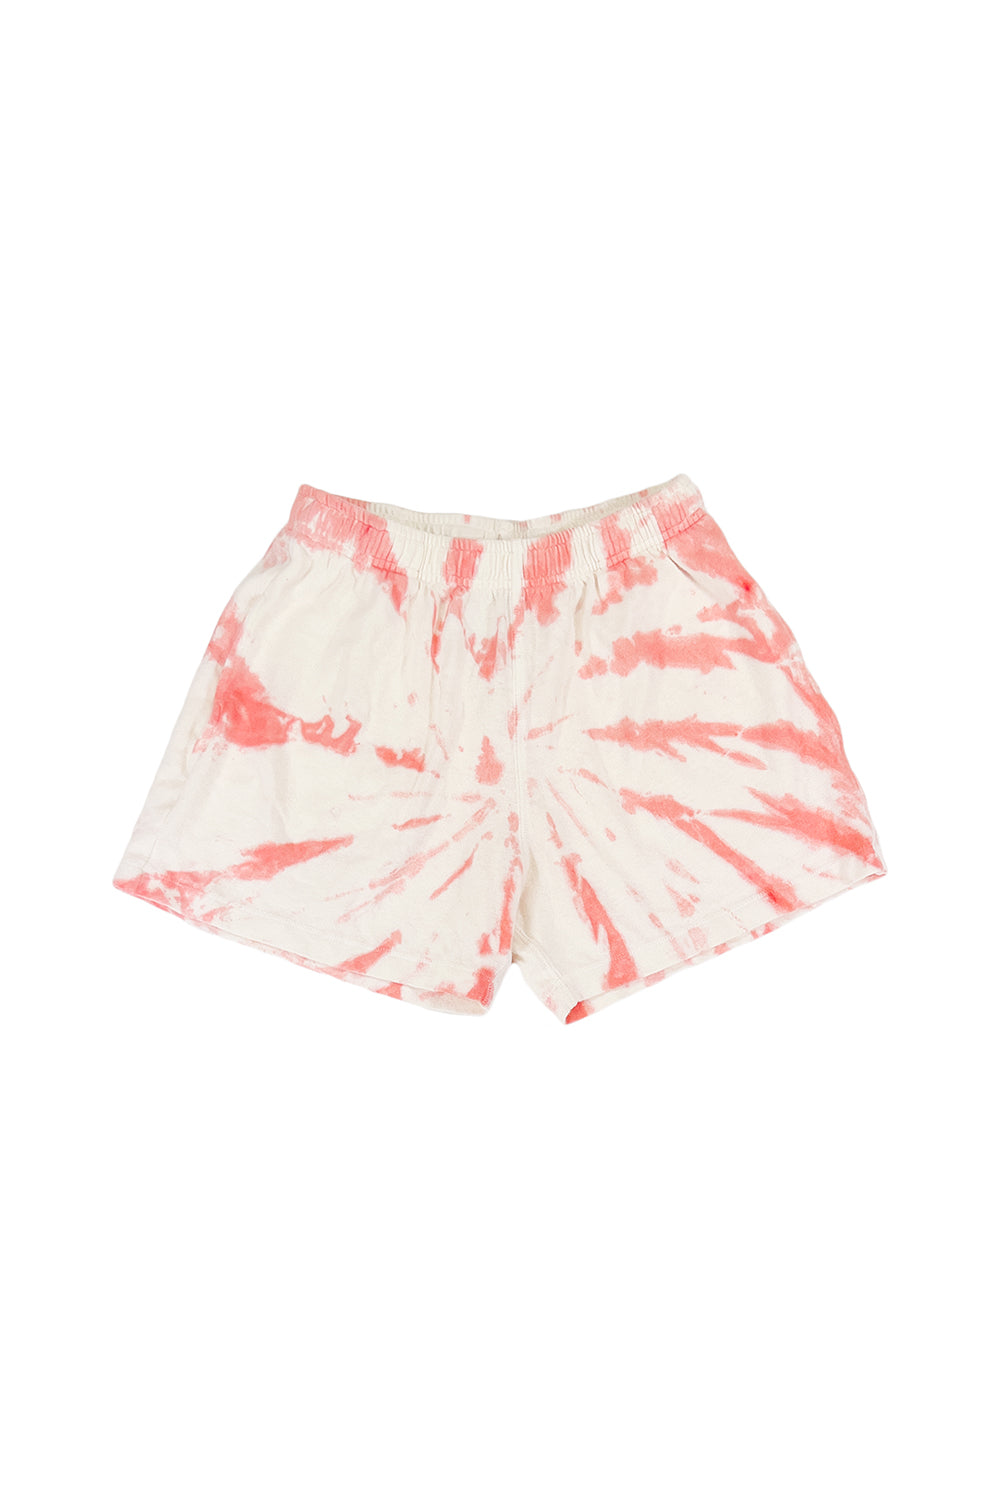 Swirl Sun Short | Jungmaven Hemp Clothing & Accessories / Color: Salmon